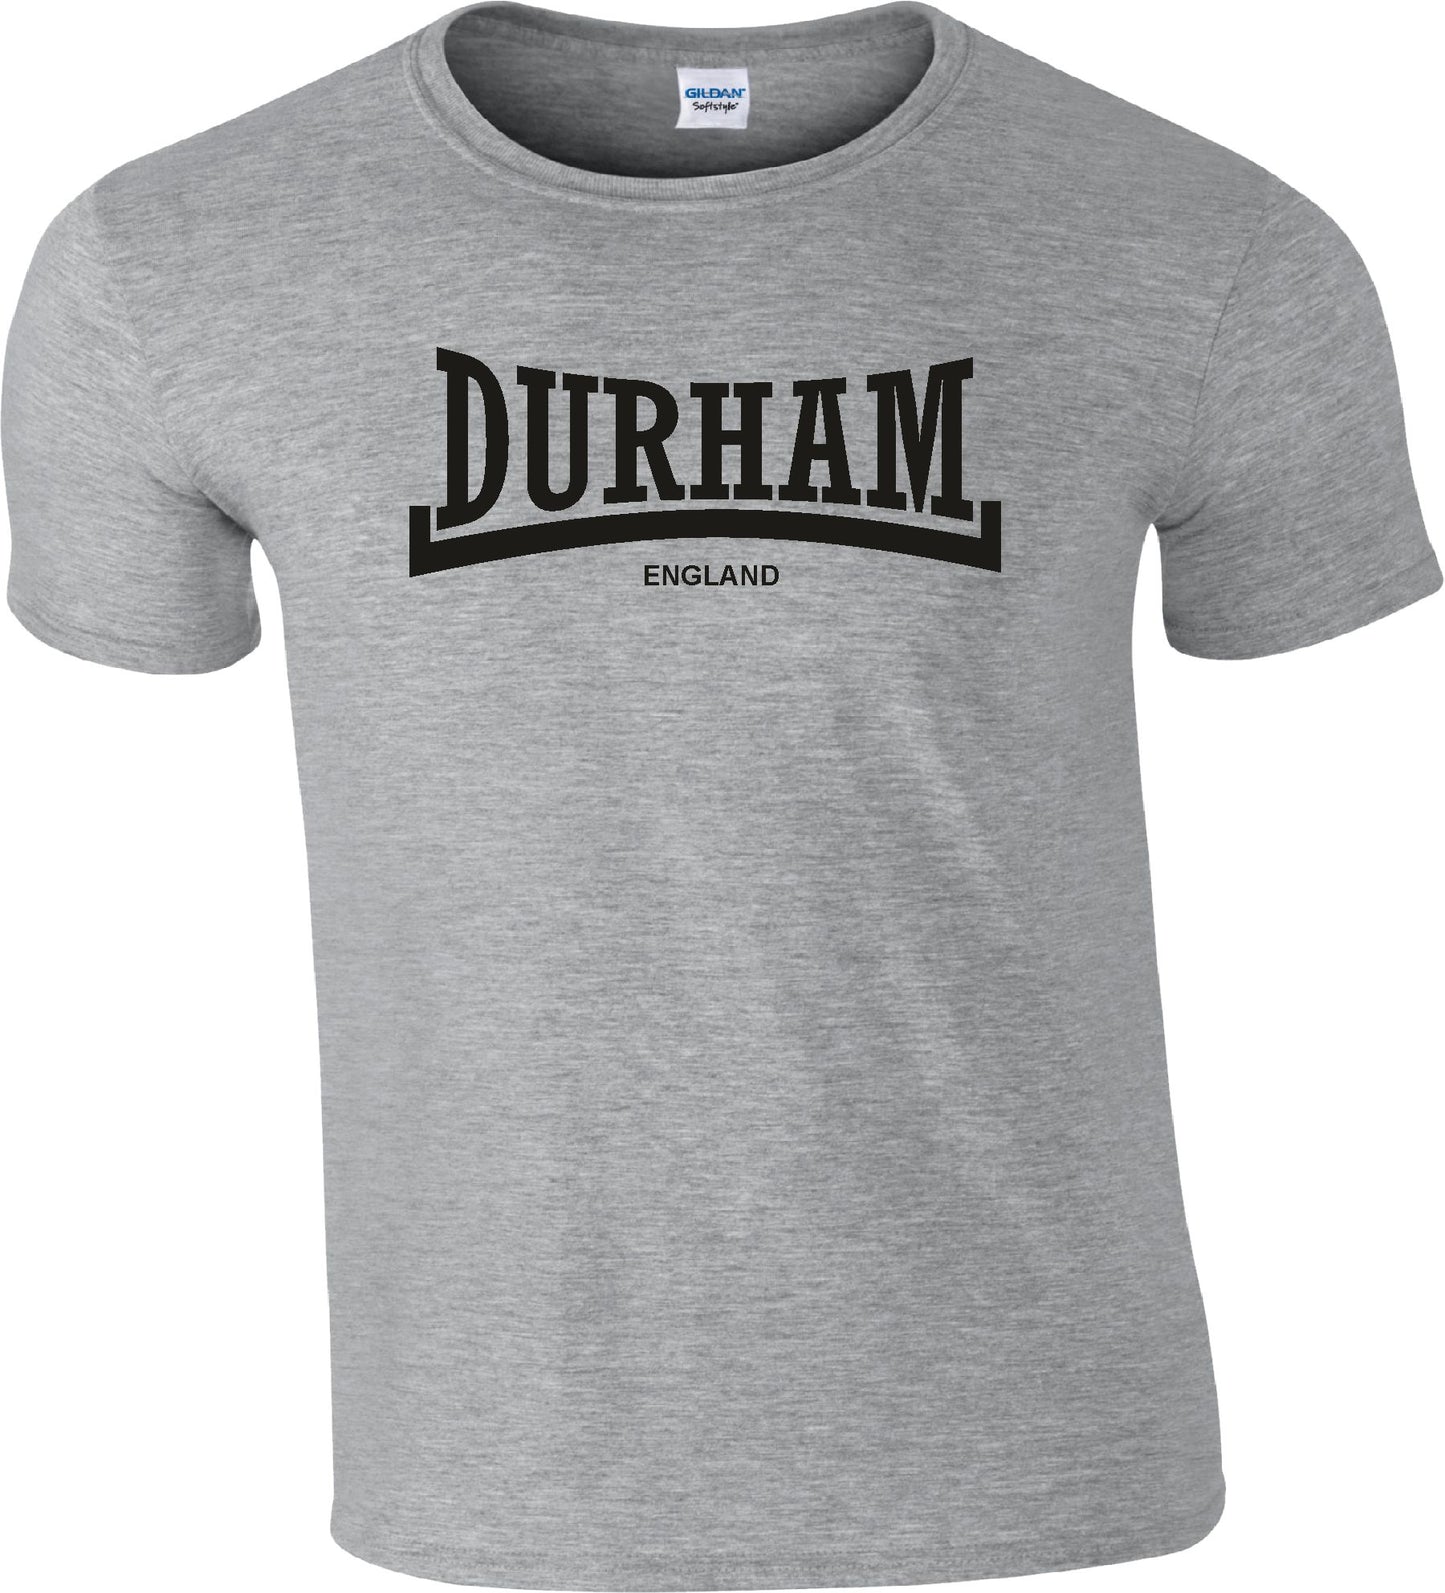 Durham, England T-Shirt - Souvenir, Custom Print Available, Various Colours